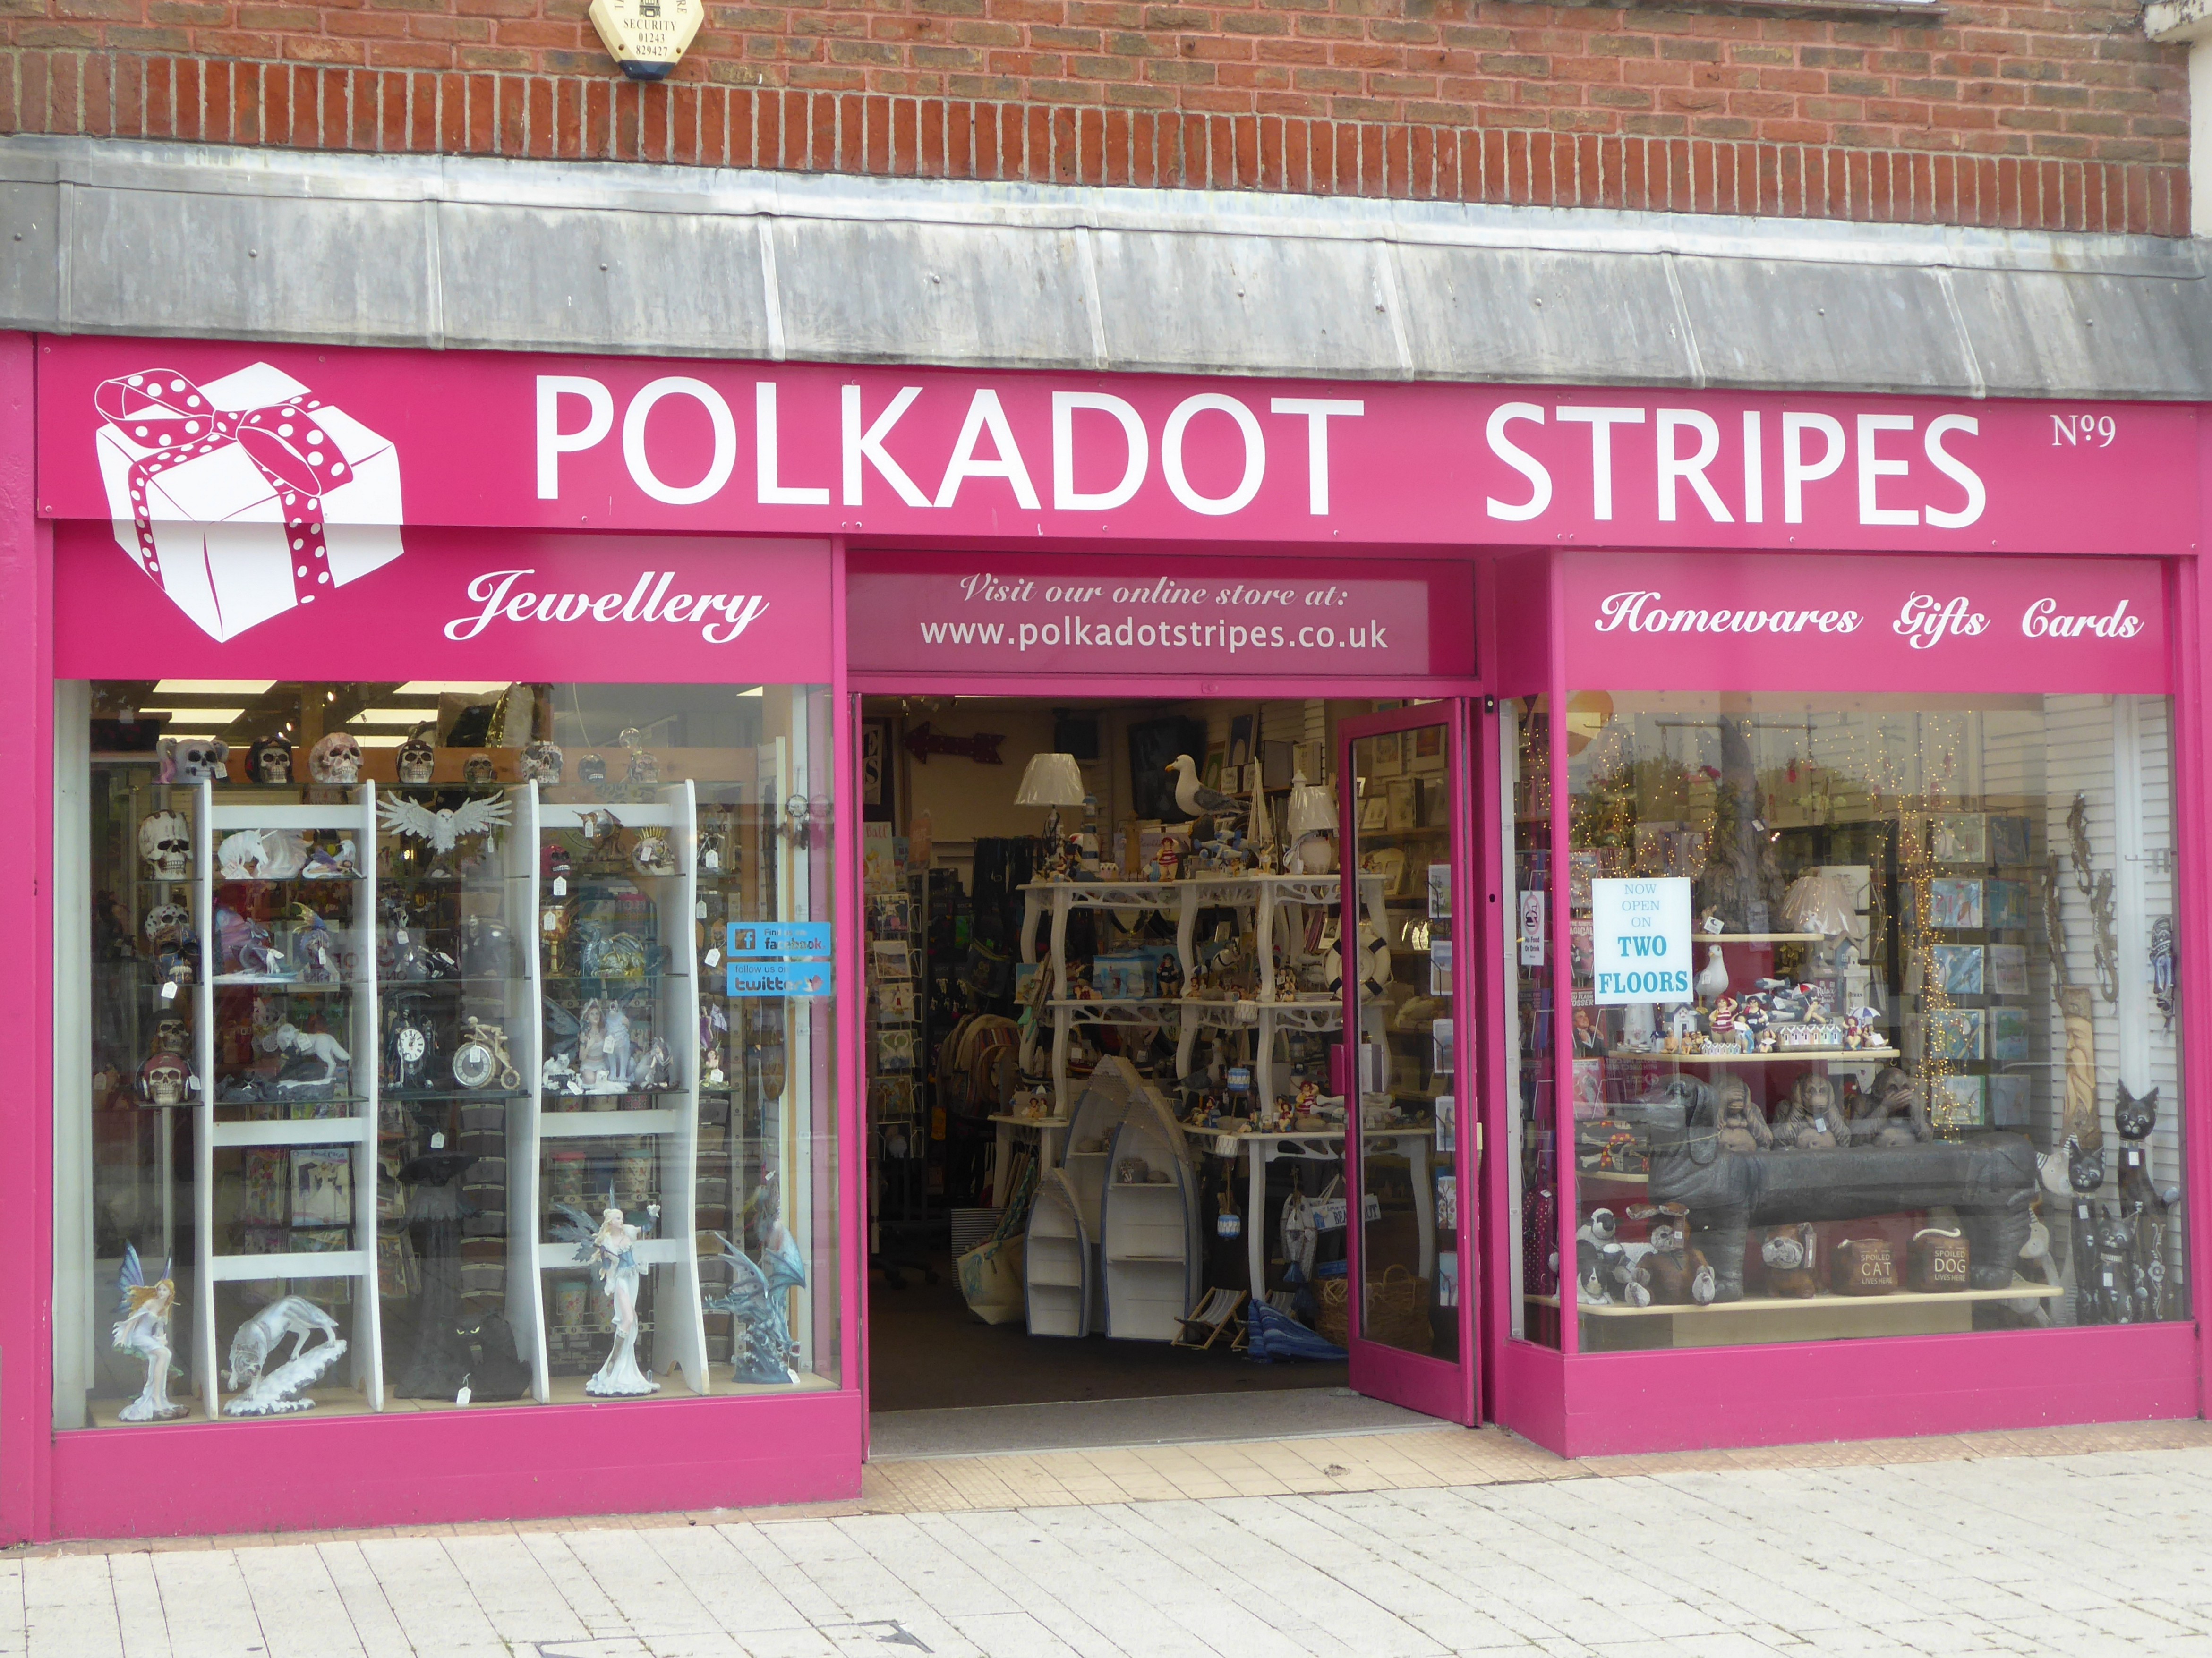 Polkadot Stripes Shop Front Aug 2019